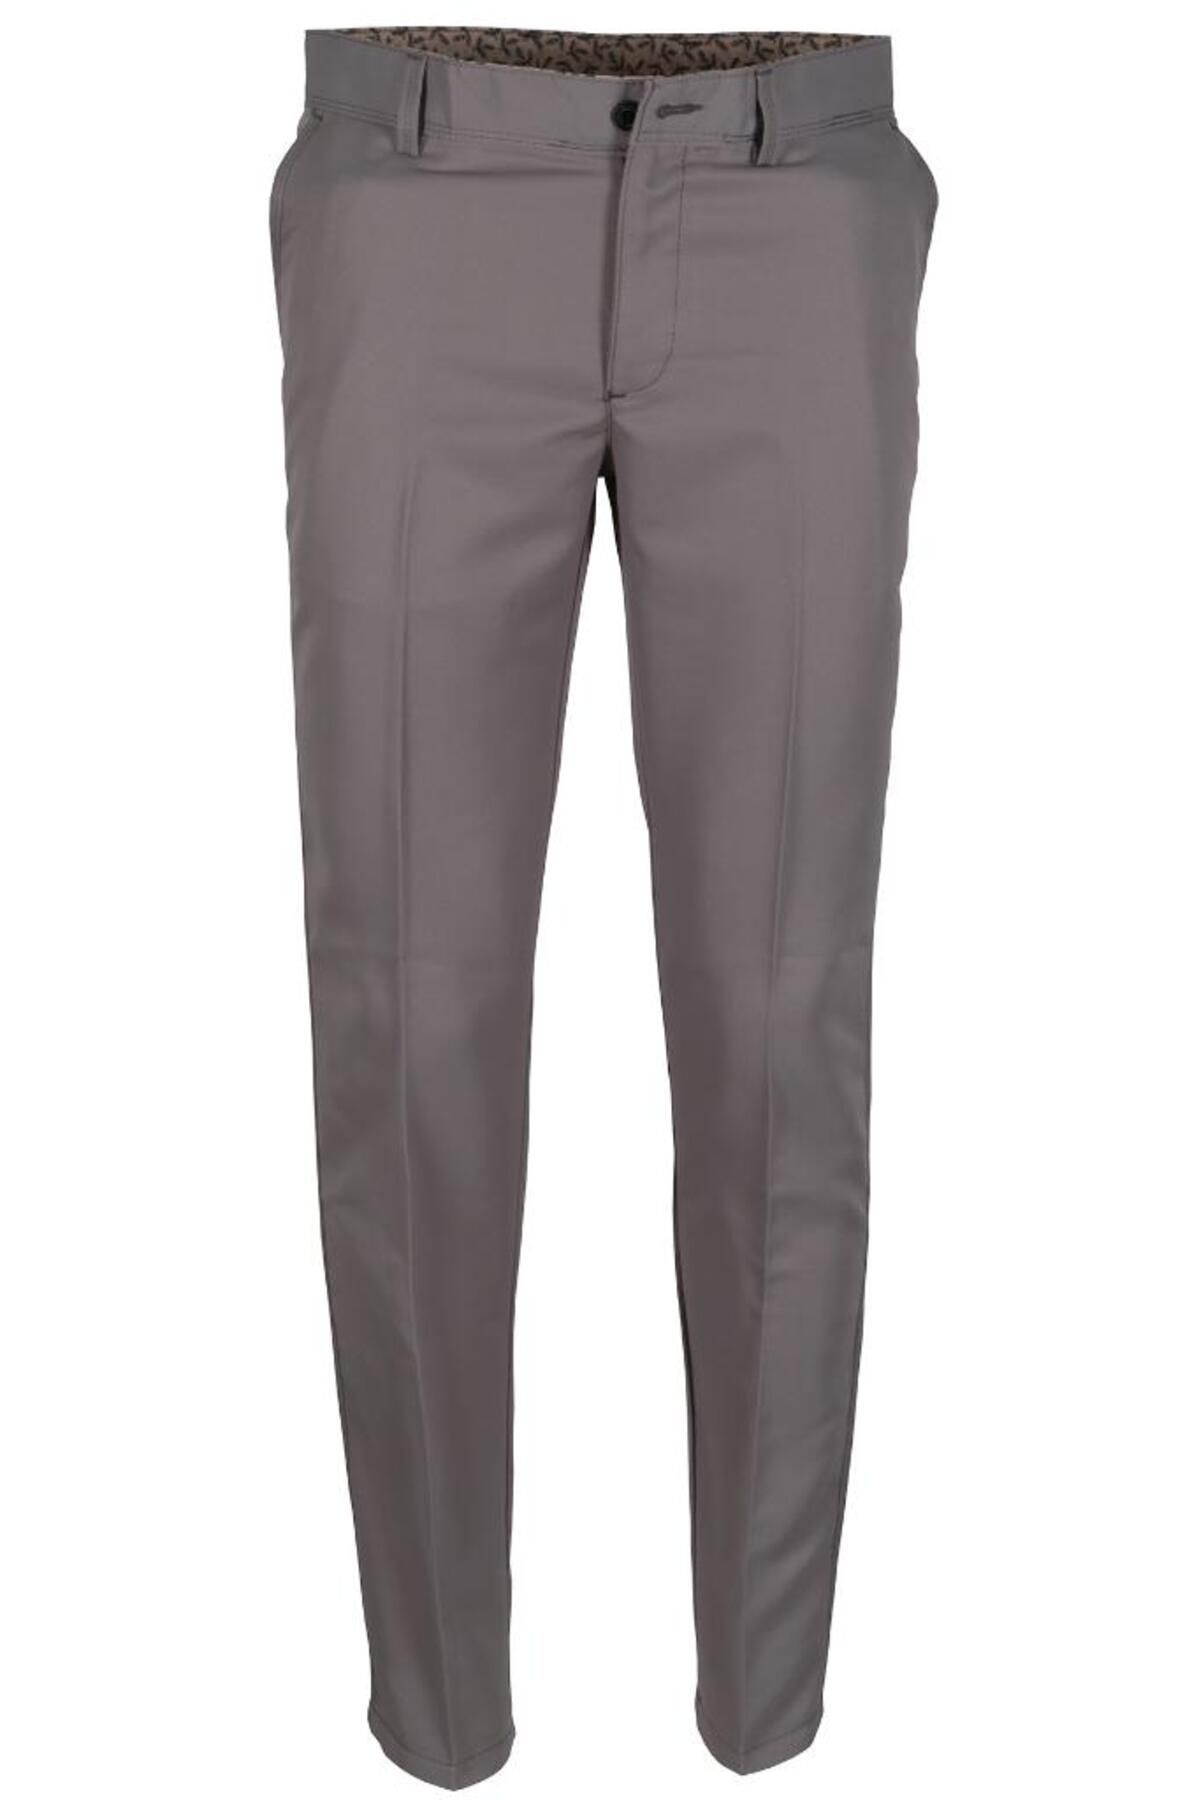 Modarar Erkek Keten Pantolon Klasik Normal Kesim RAR01157